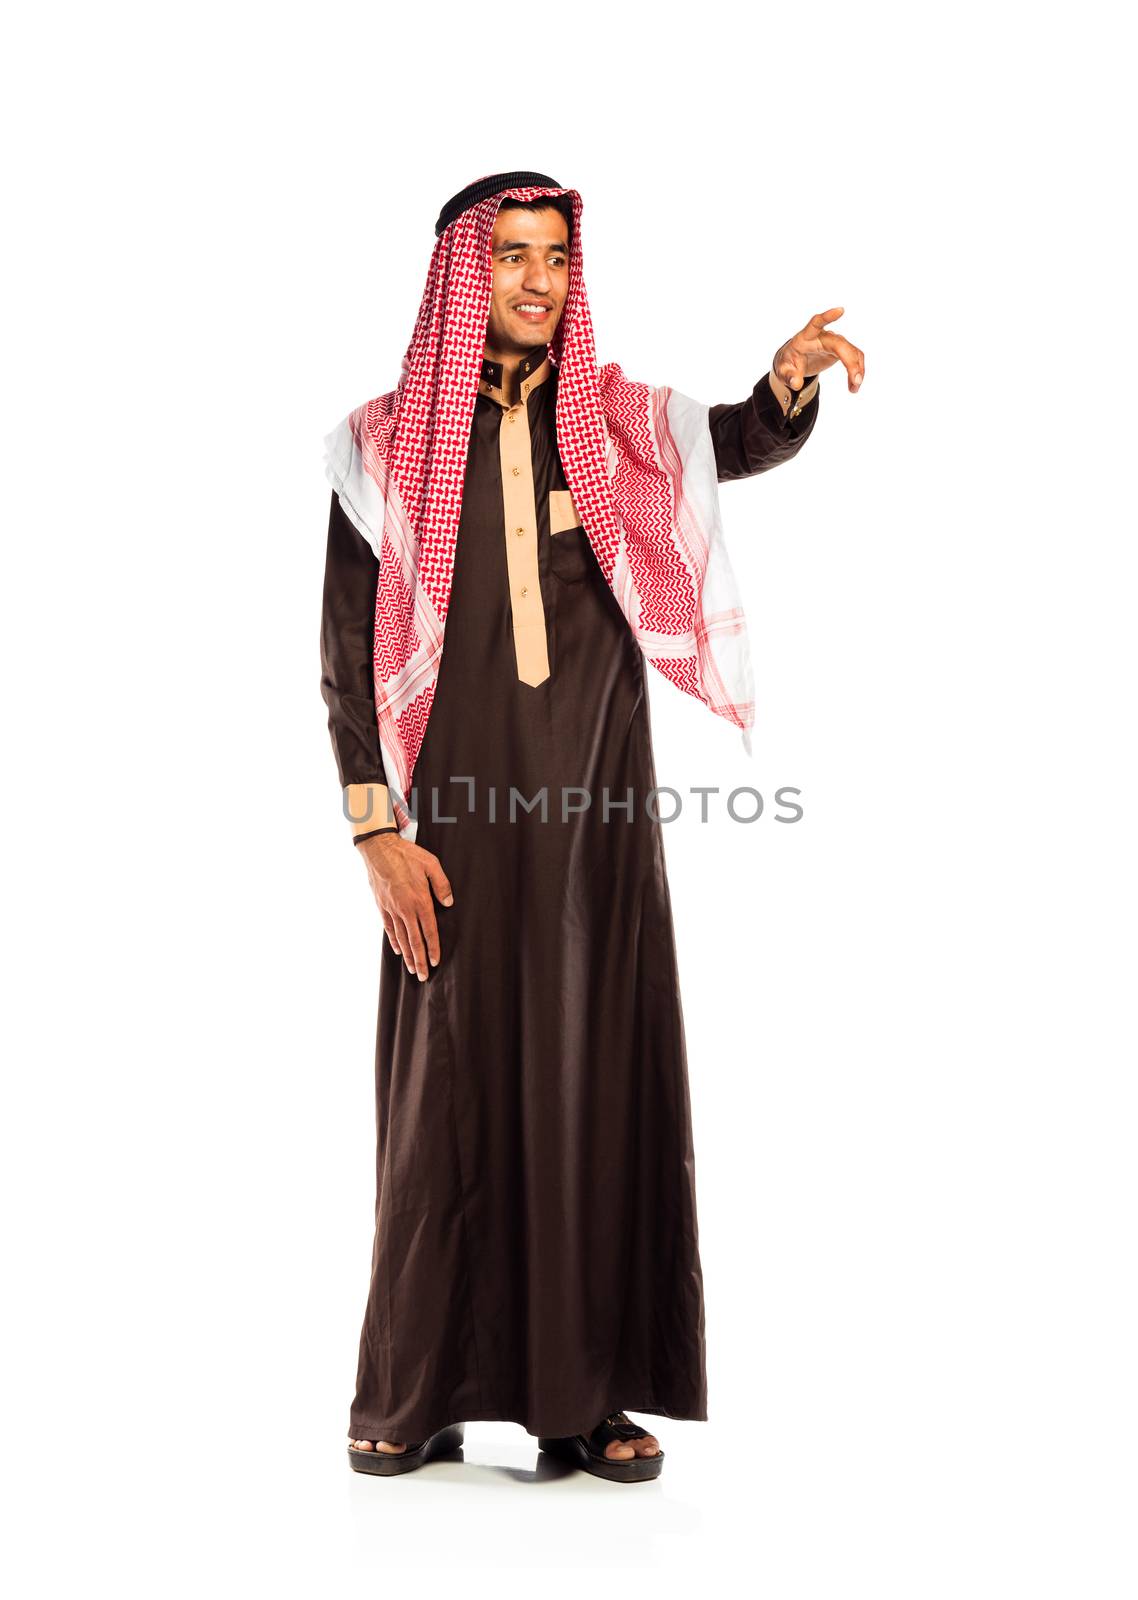 Arab man pressing virtual button on white background